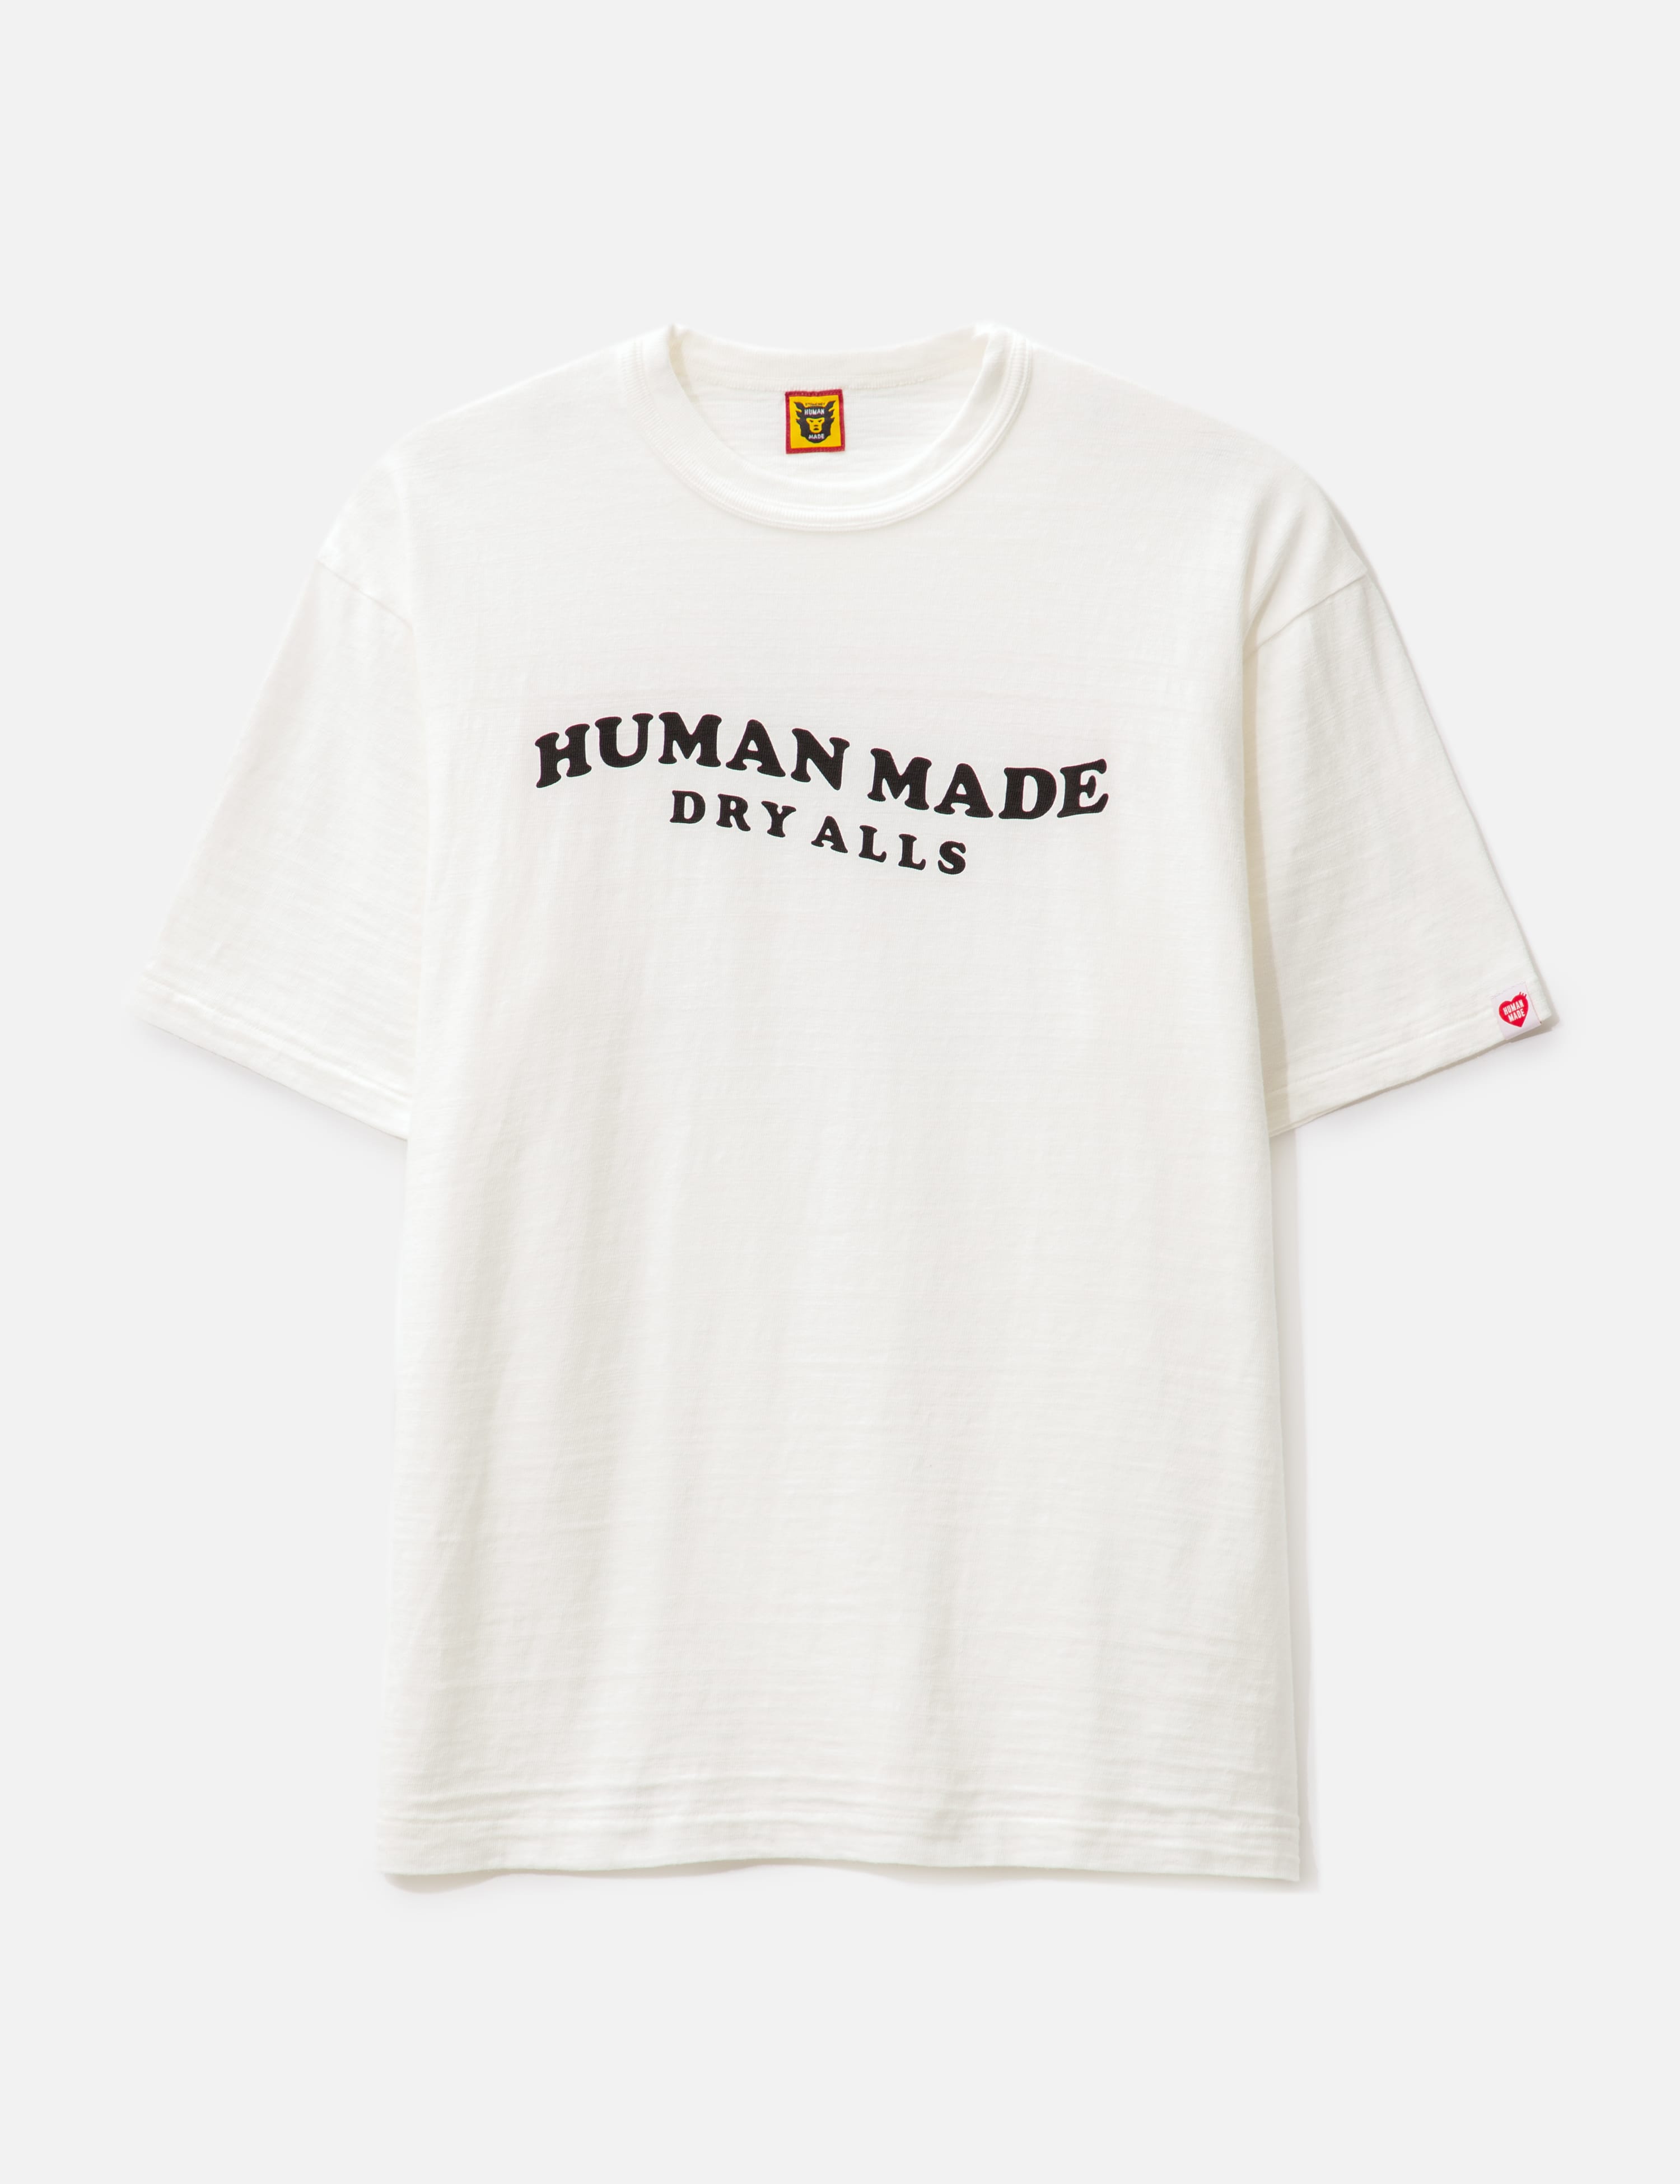 Human Made | HBX - ハイプビースト(Hypebeast)が厳選したグローバル ...